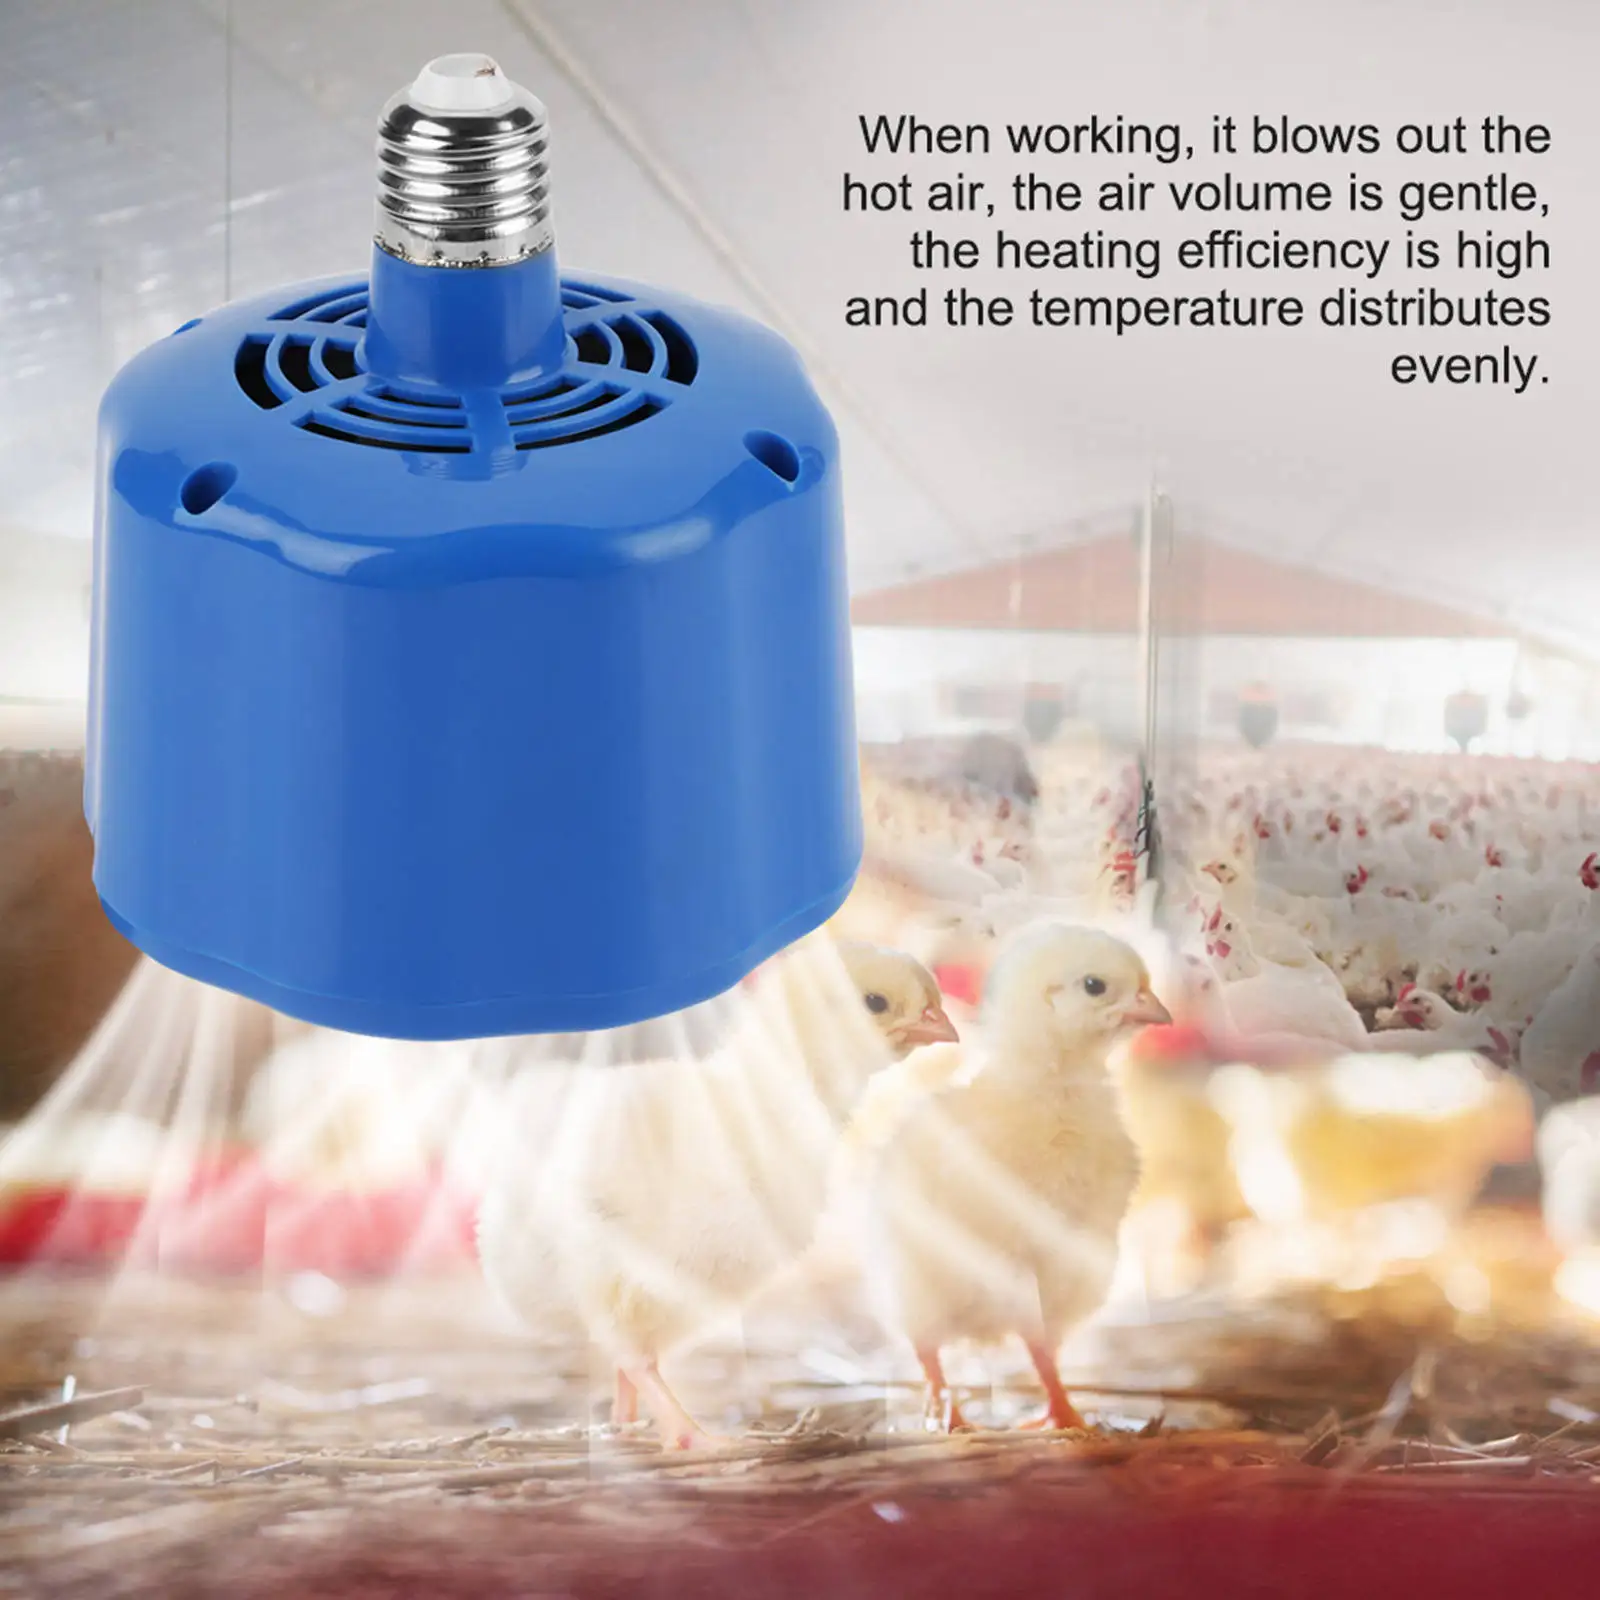 Animal Warm Lights Duck Warm Lamps Farm Heater for Incubator Farm Tools, Three Gears Temperature Adjustable